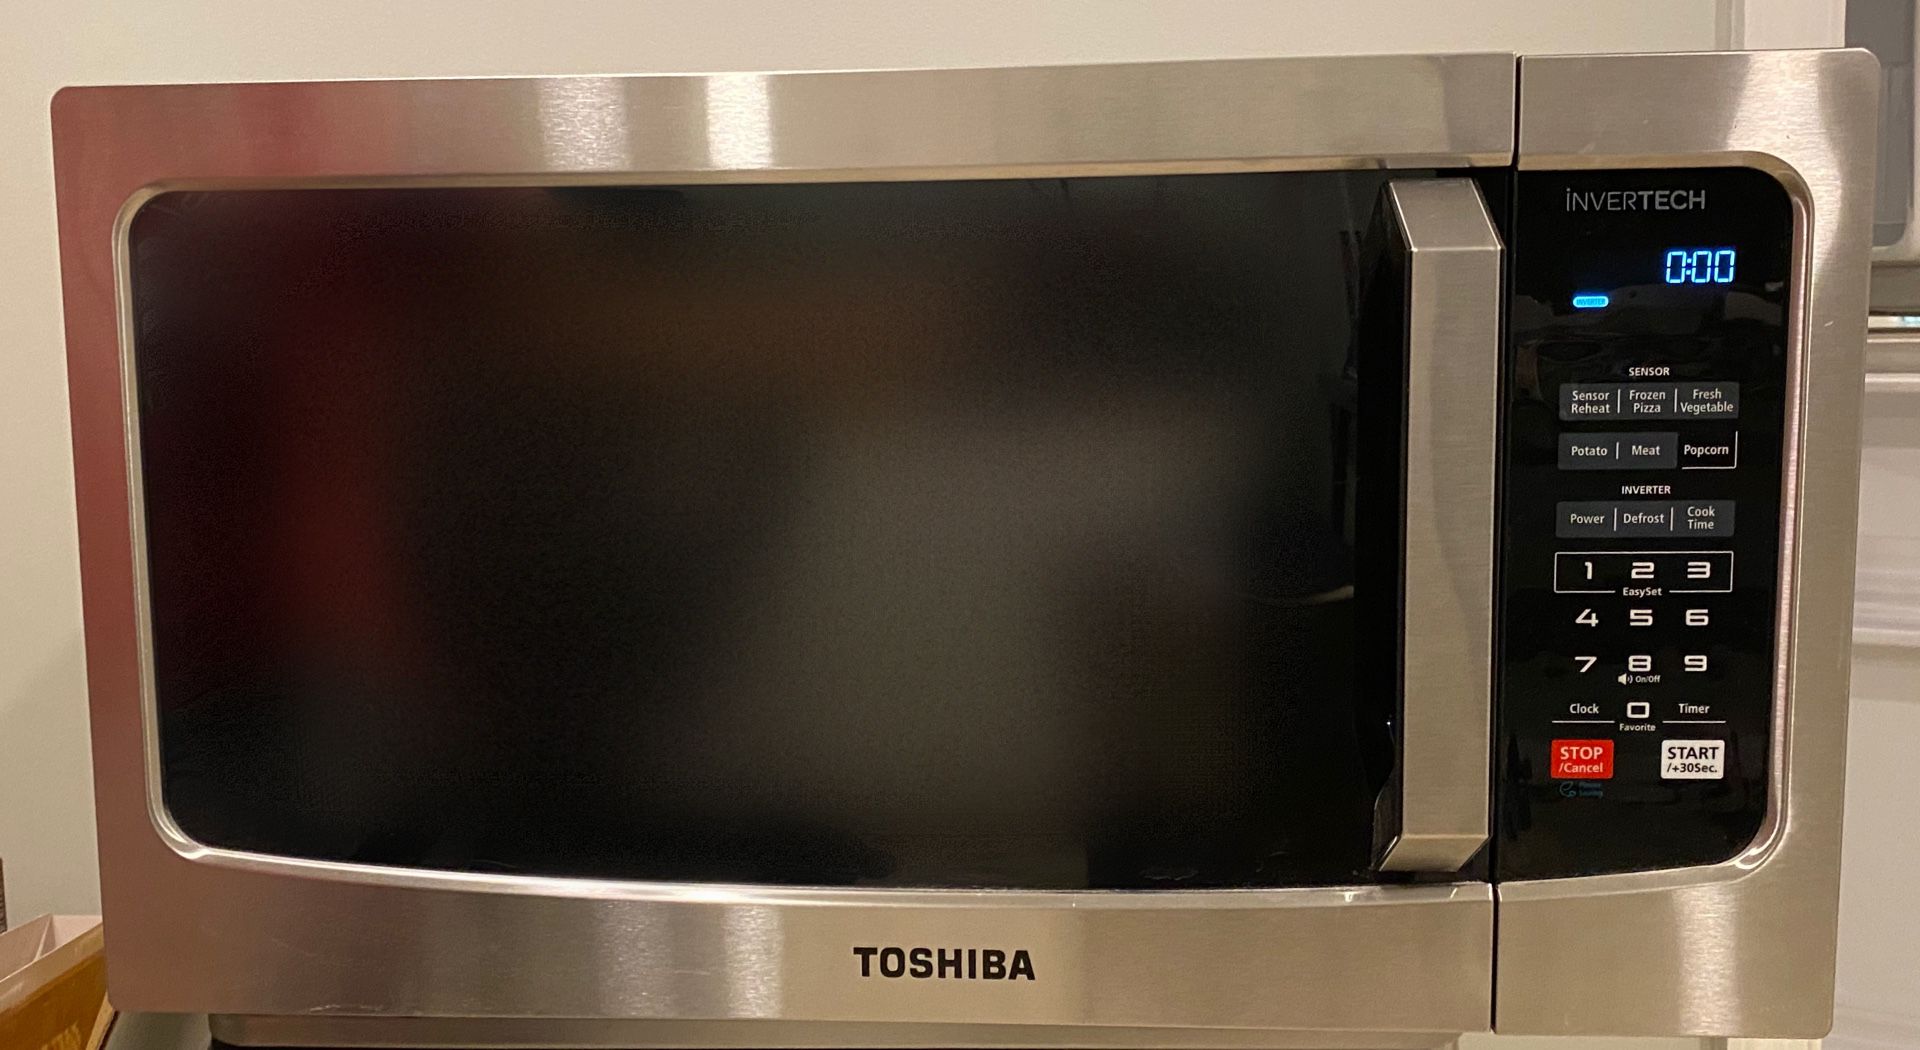 Toshiba Inverter Convection Microwave